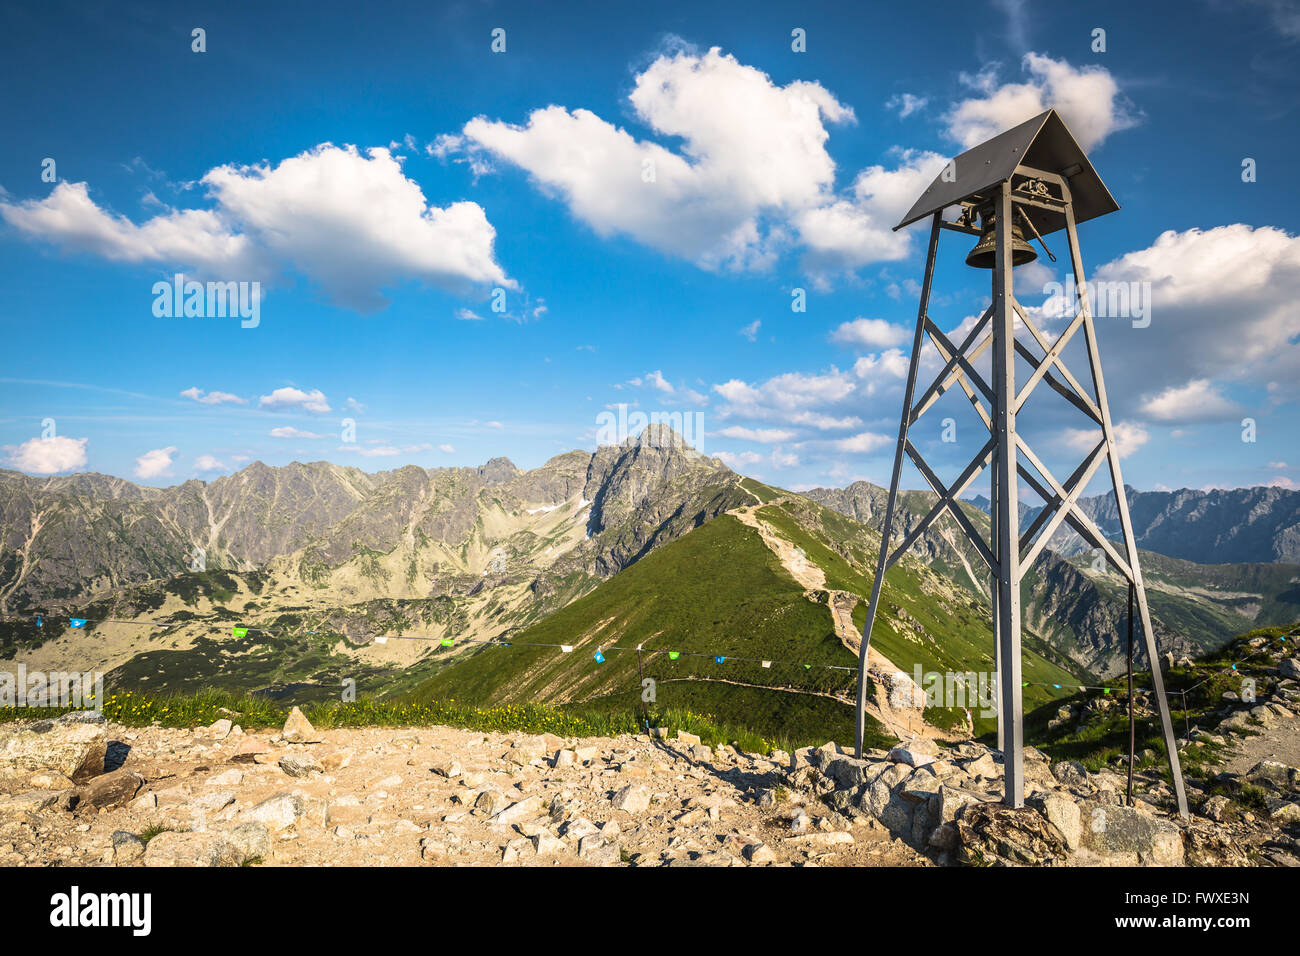 Belfry in montagna. Una semplice torre campanaria in Cima Kasprowy Wierch nei monti Tatra in Polonia. Foto Stock